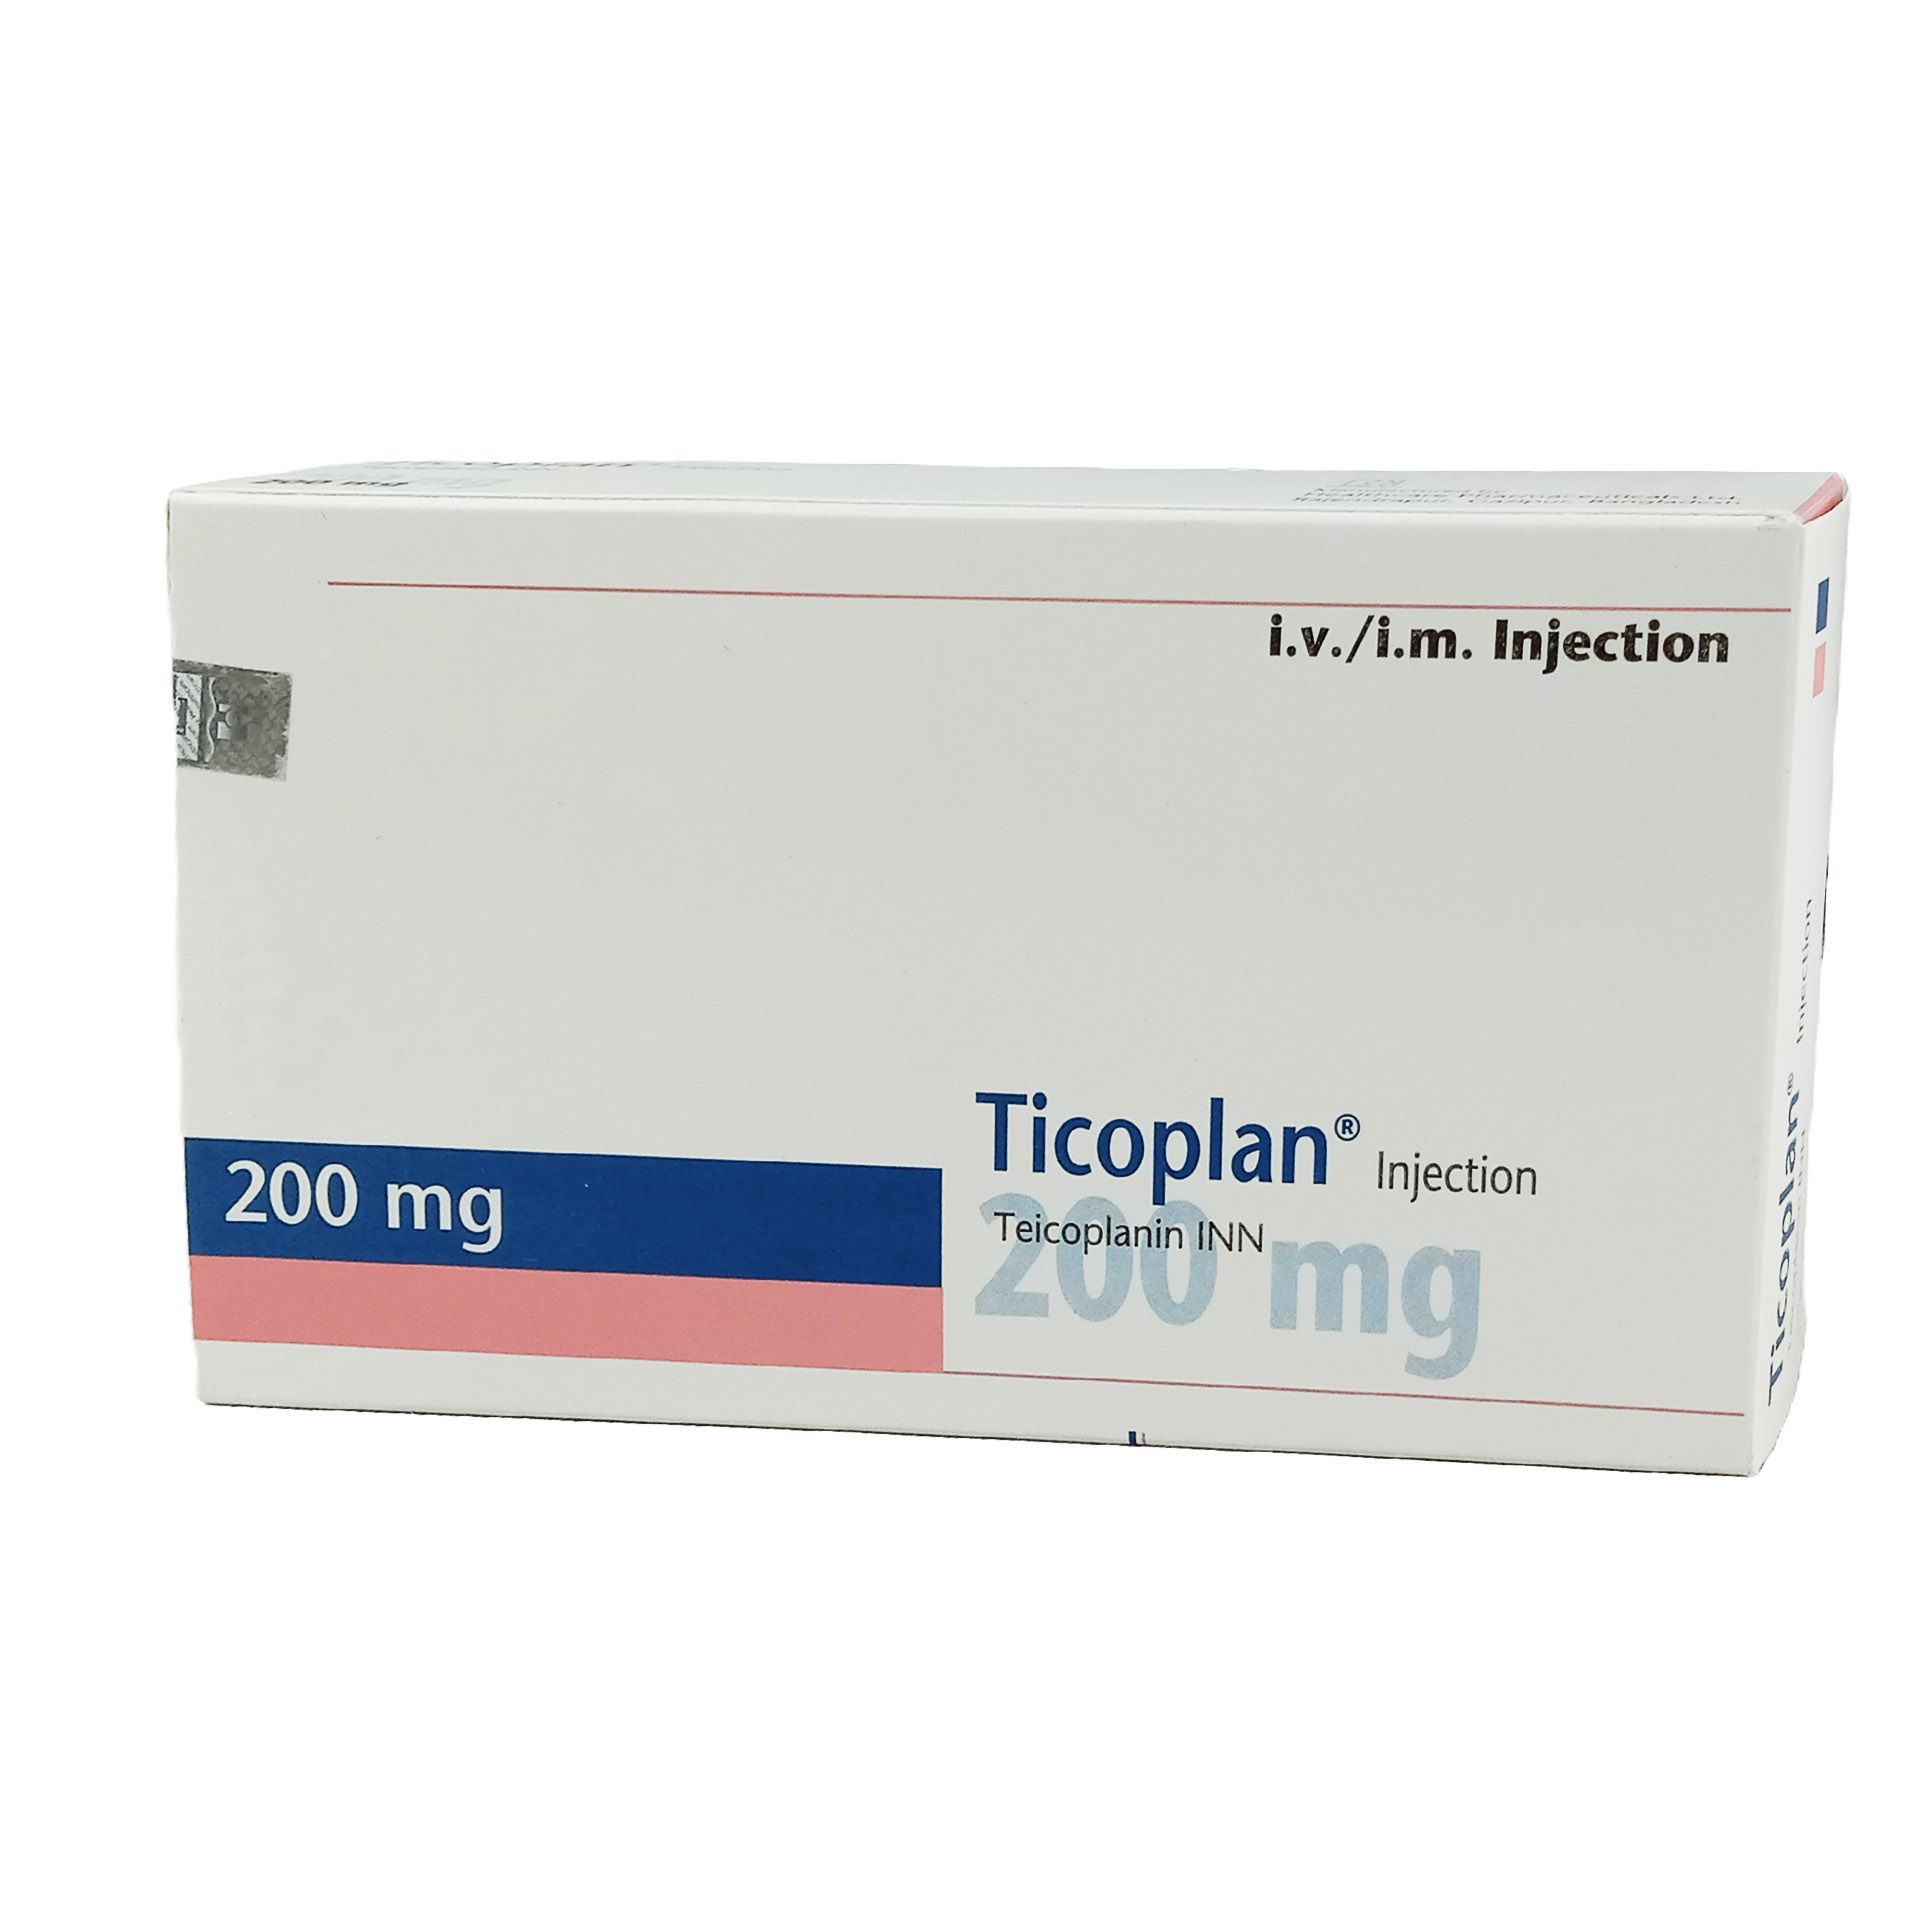 Ticoplan 200mg/vial Injection